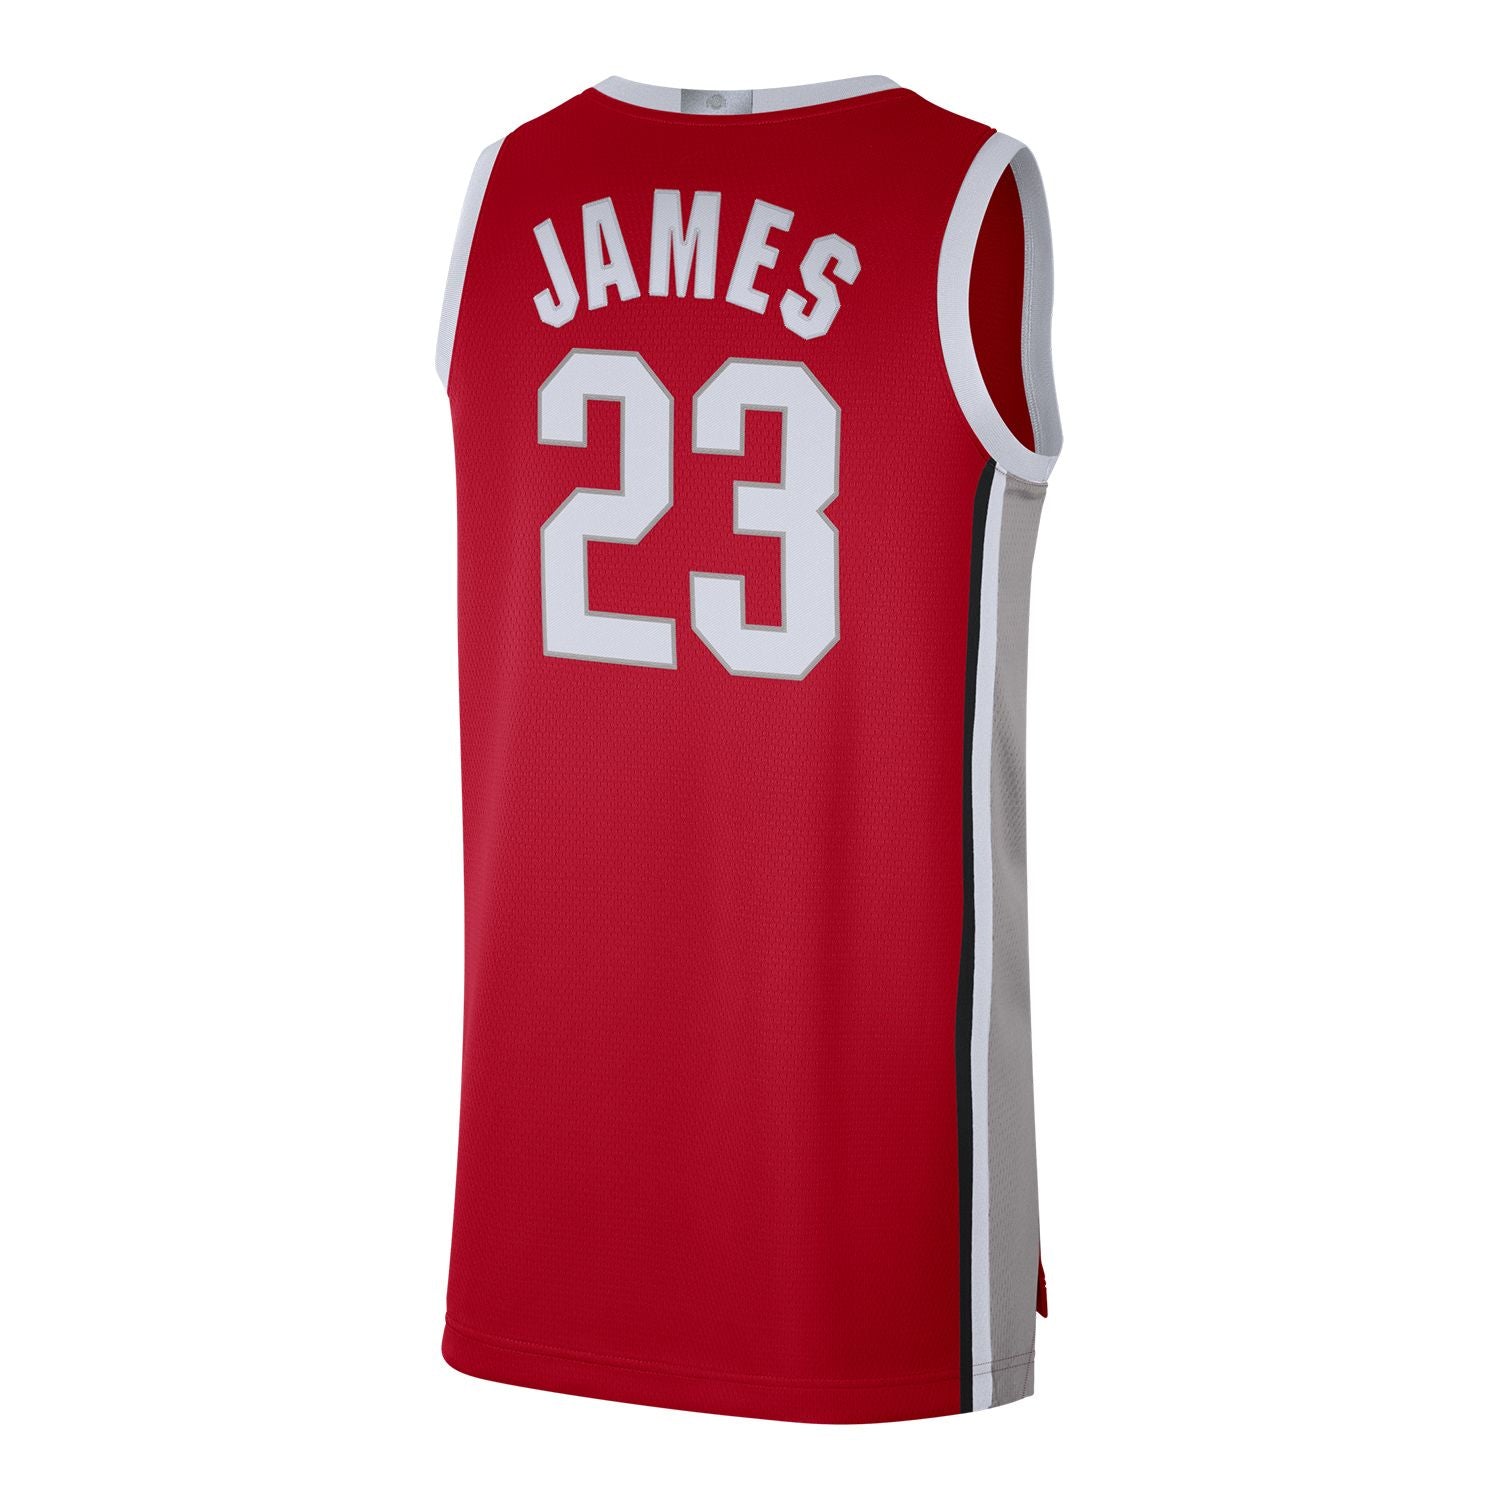 LeBron James Jerseys, Shirts & Gear.